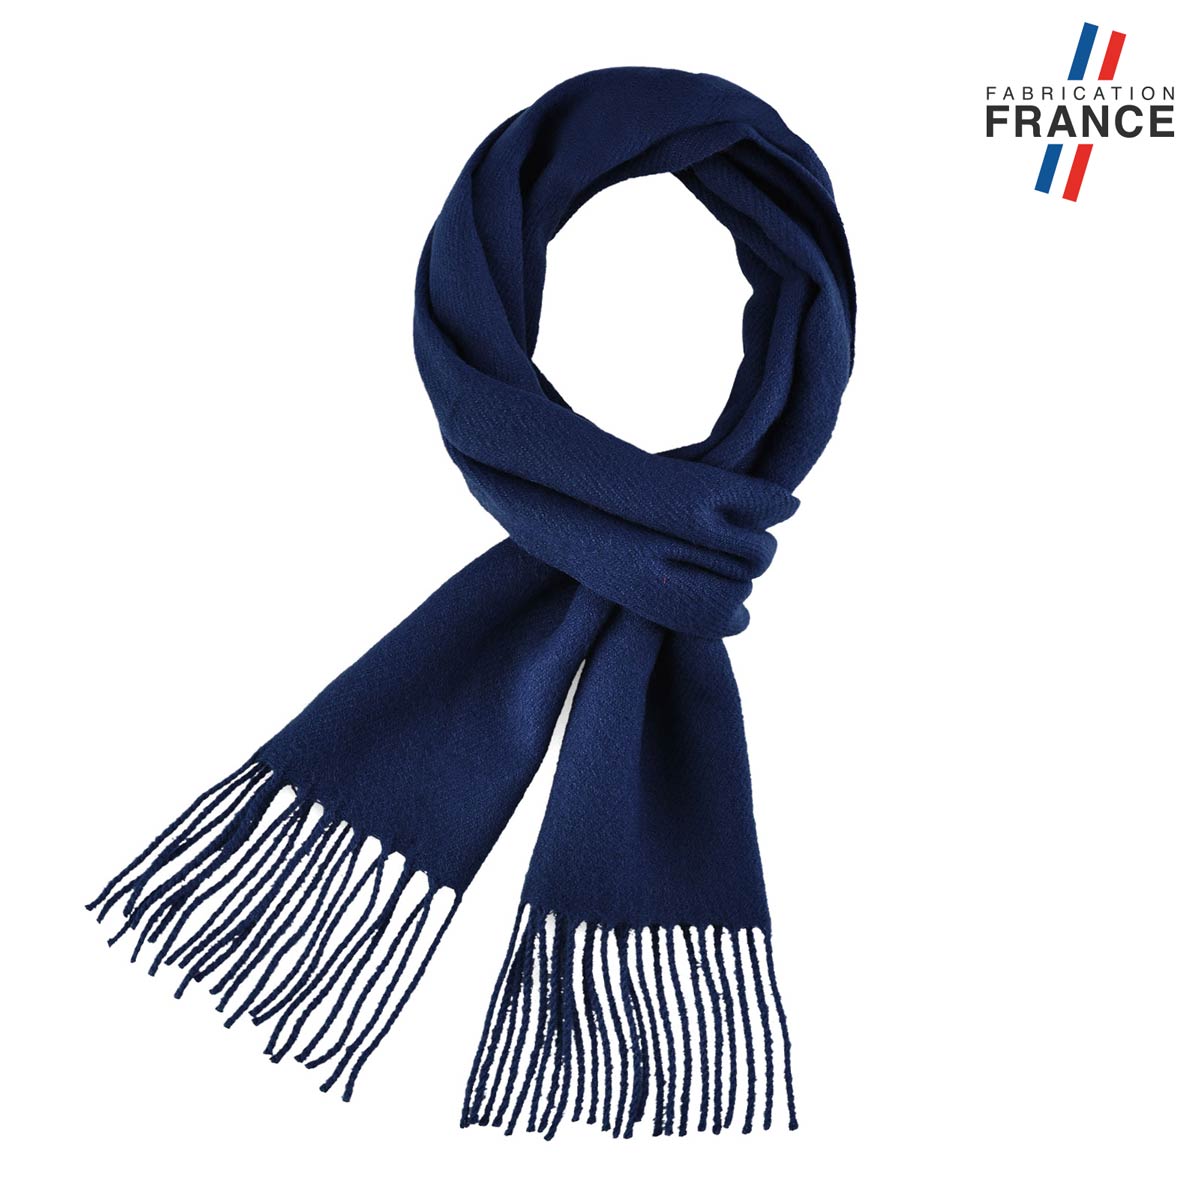 AT-05134_F12-1FR_Echarpe-a-franges-bleue-fabrication-francaise